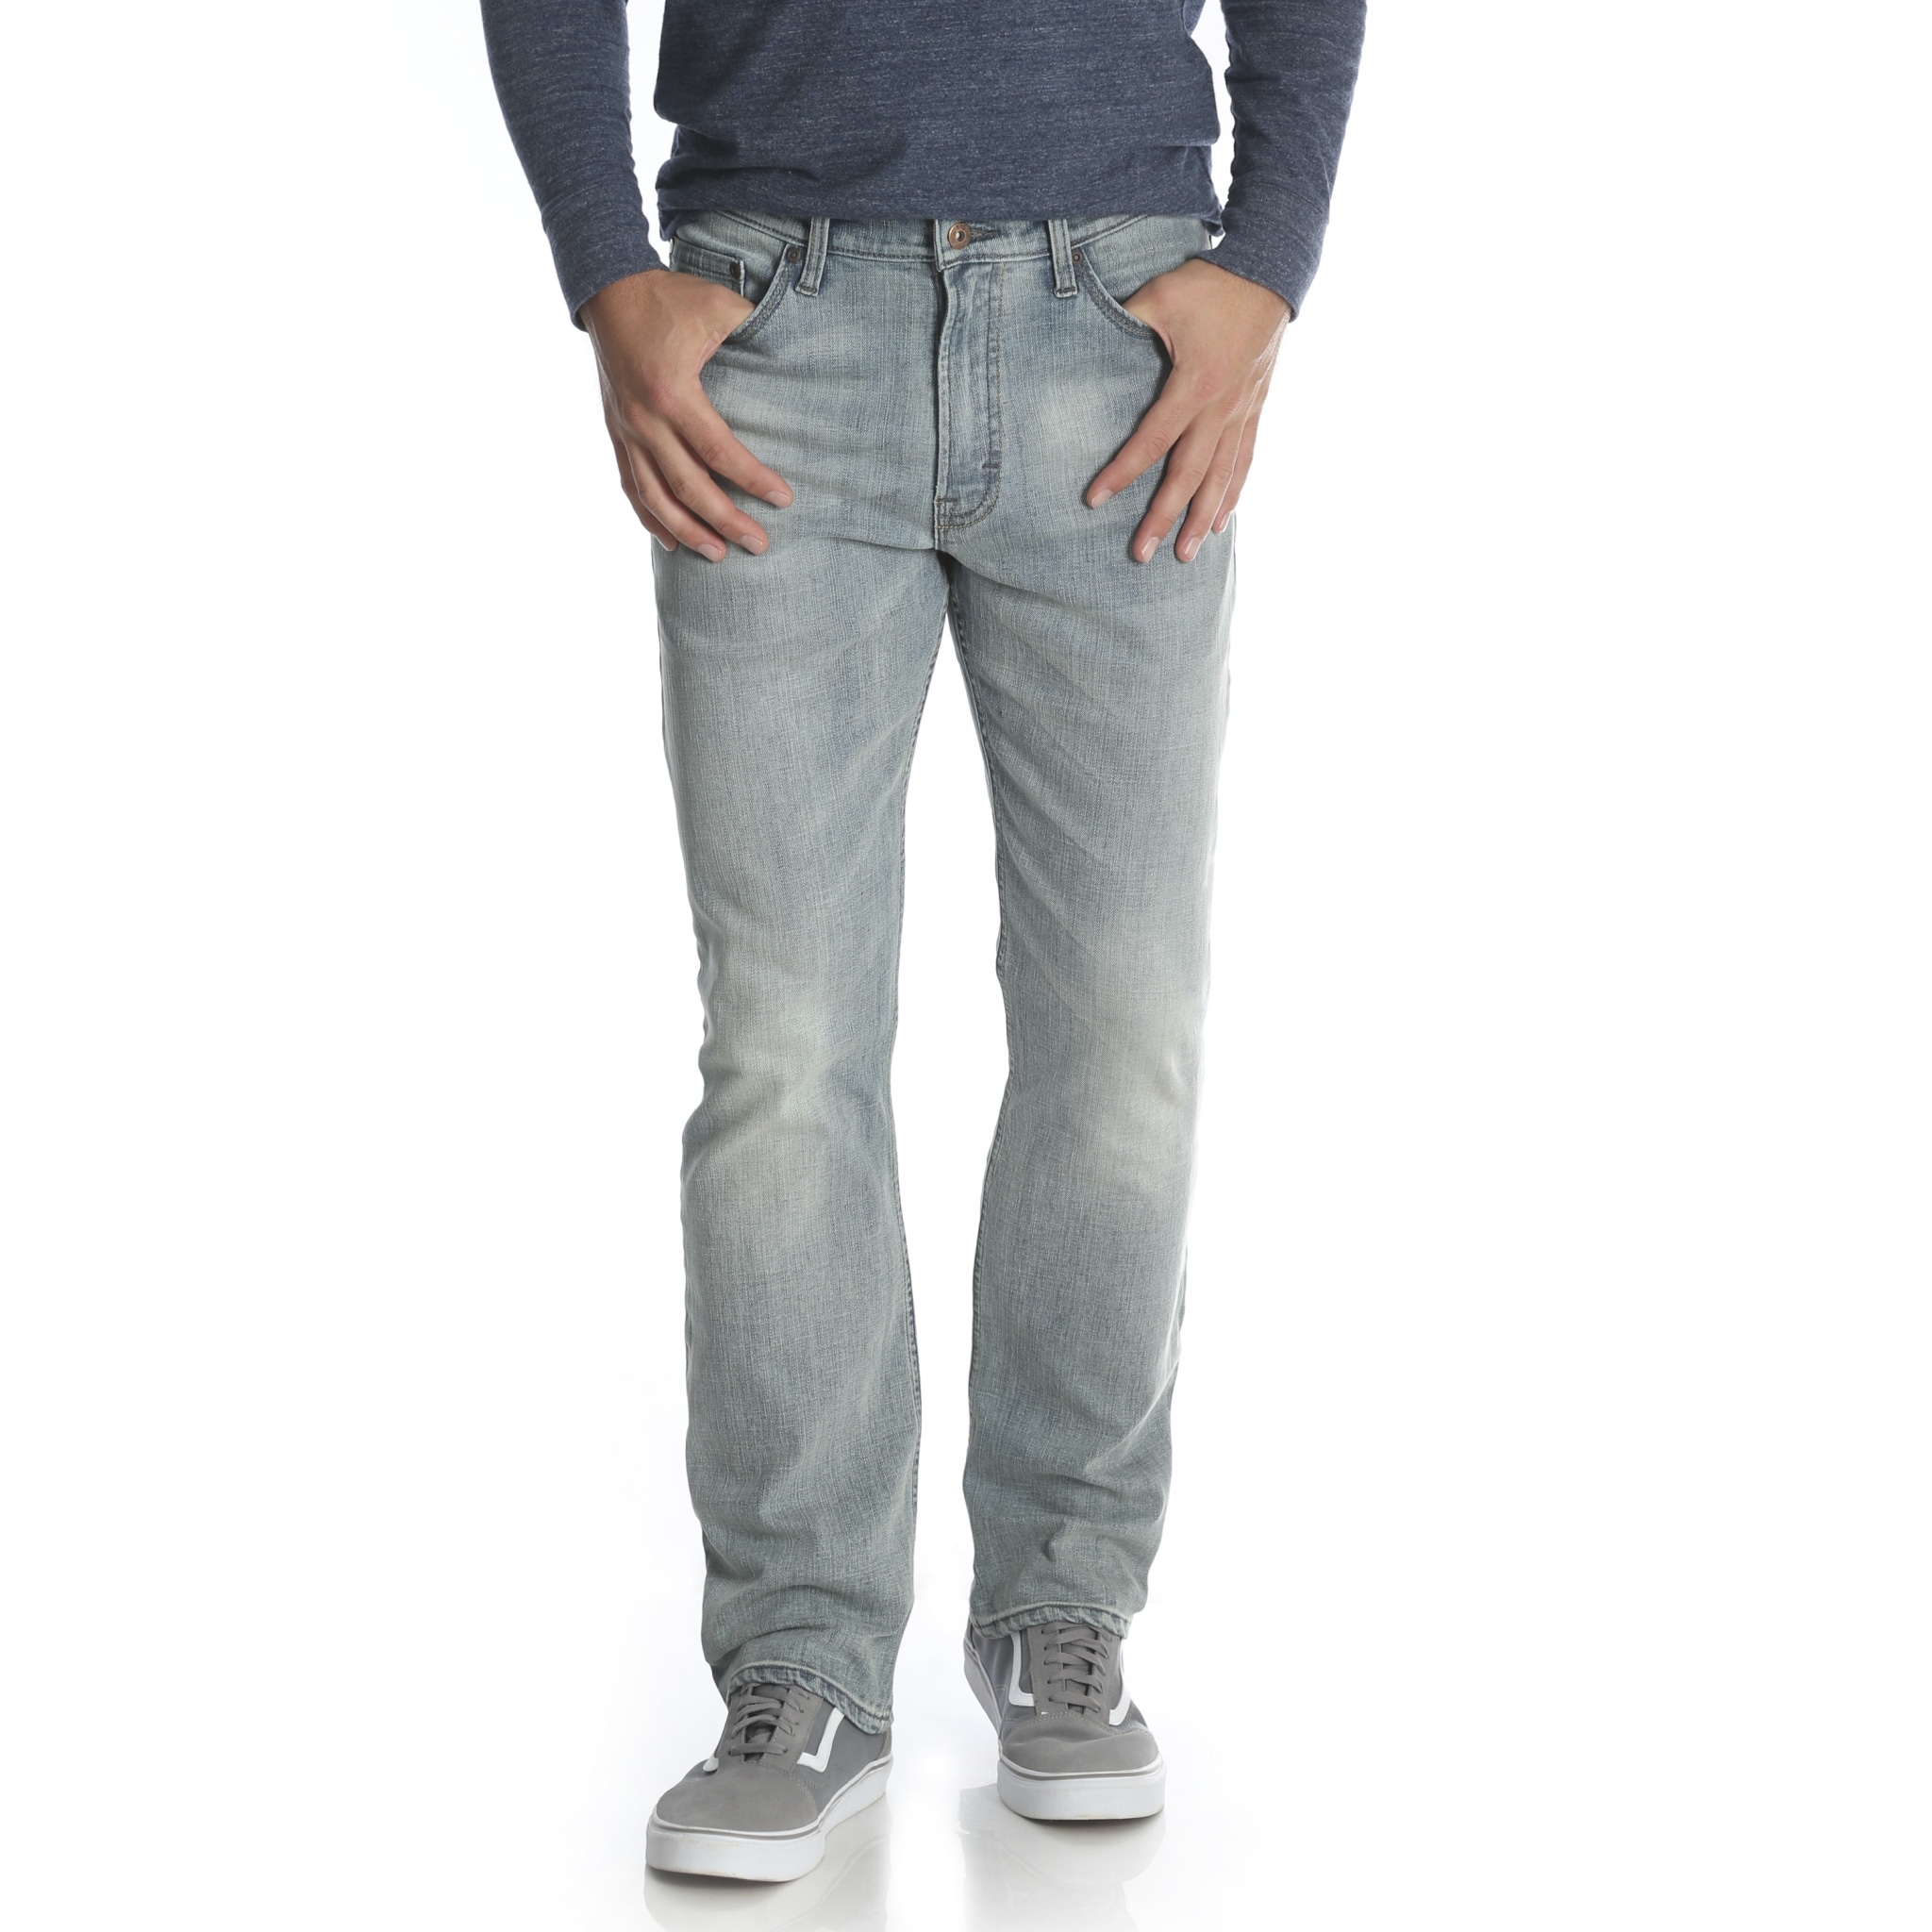 wrangler jeans 30x30